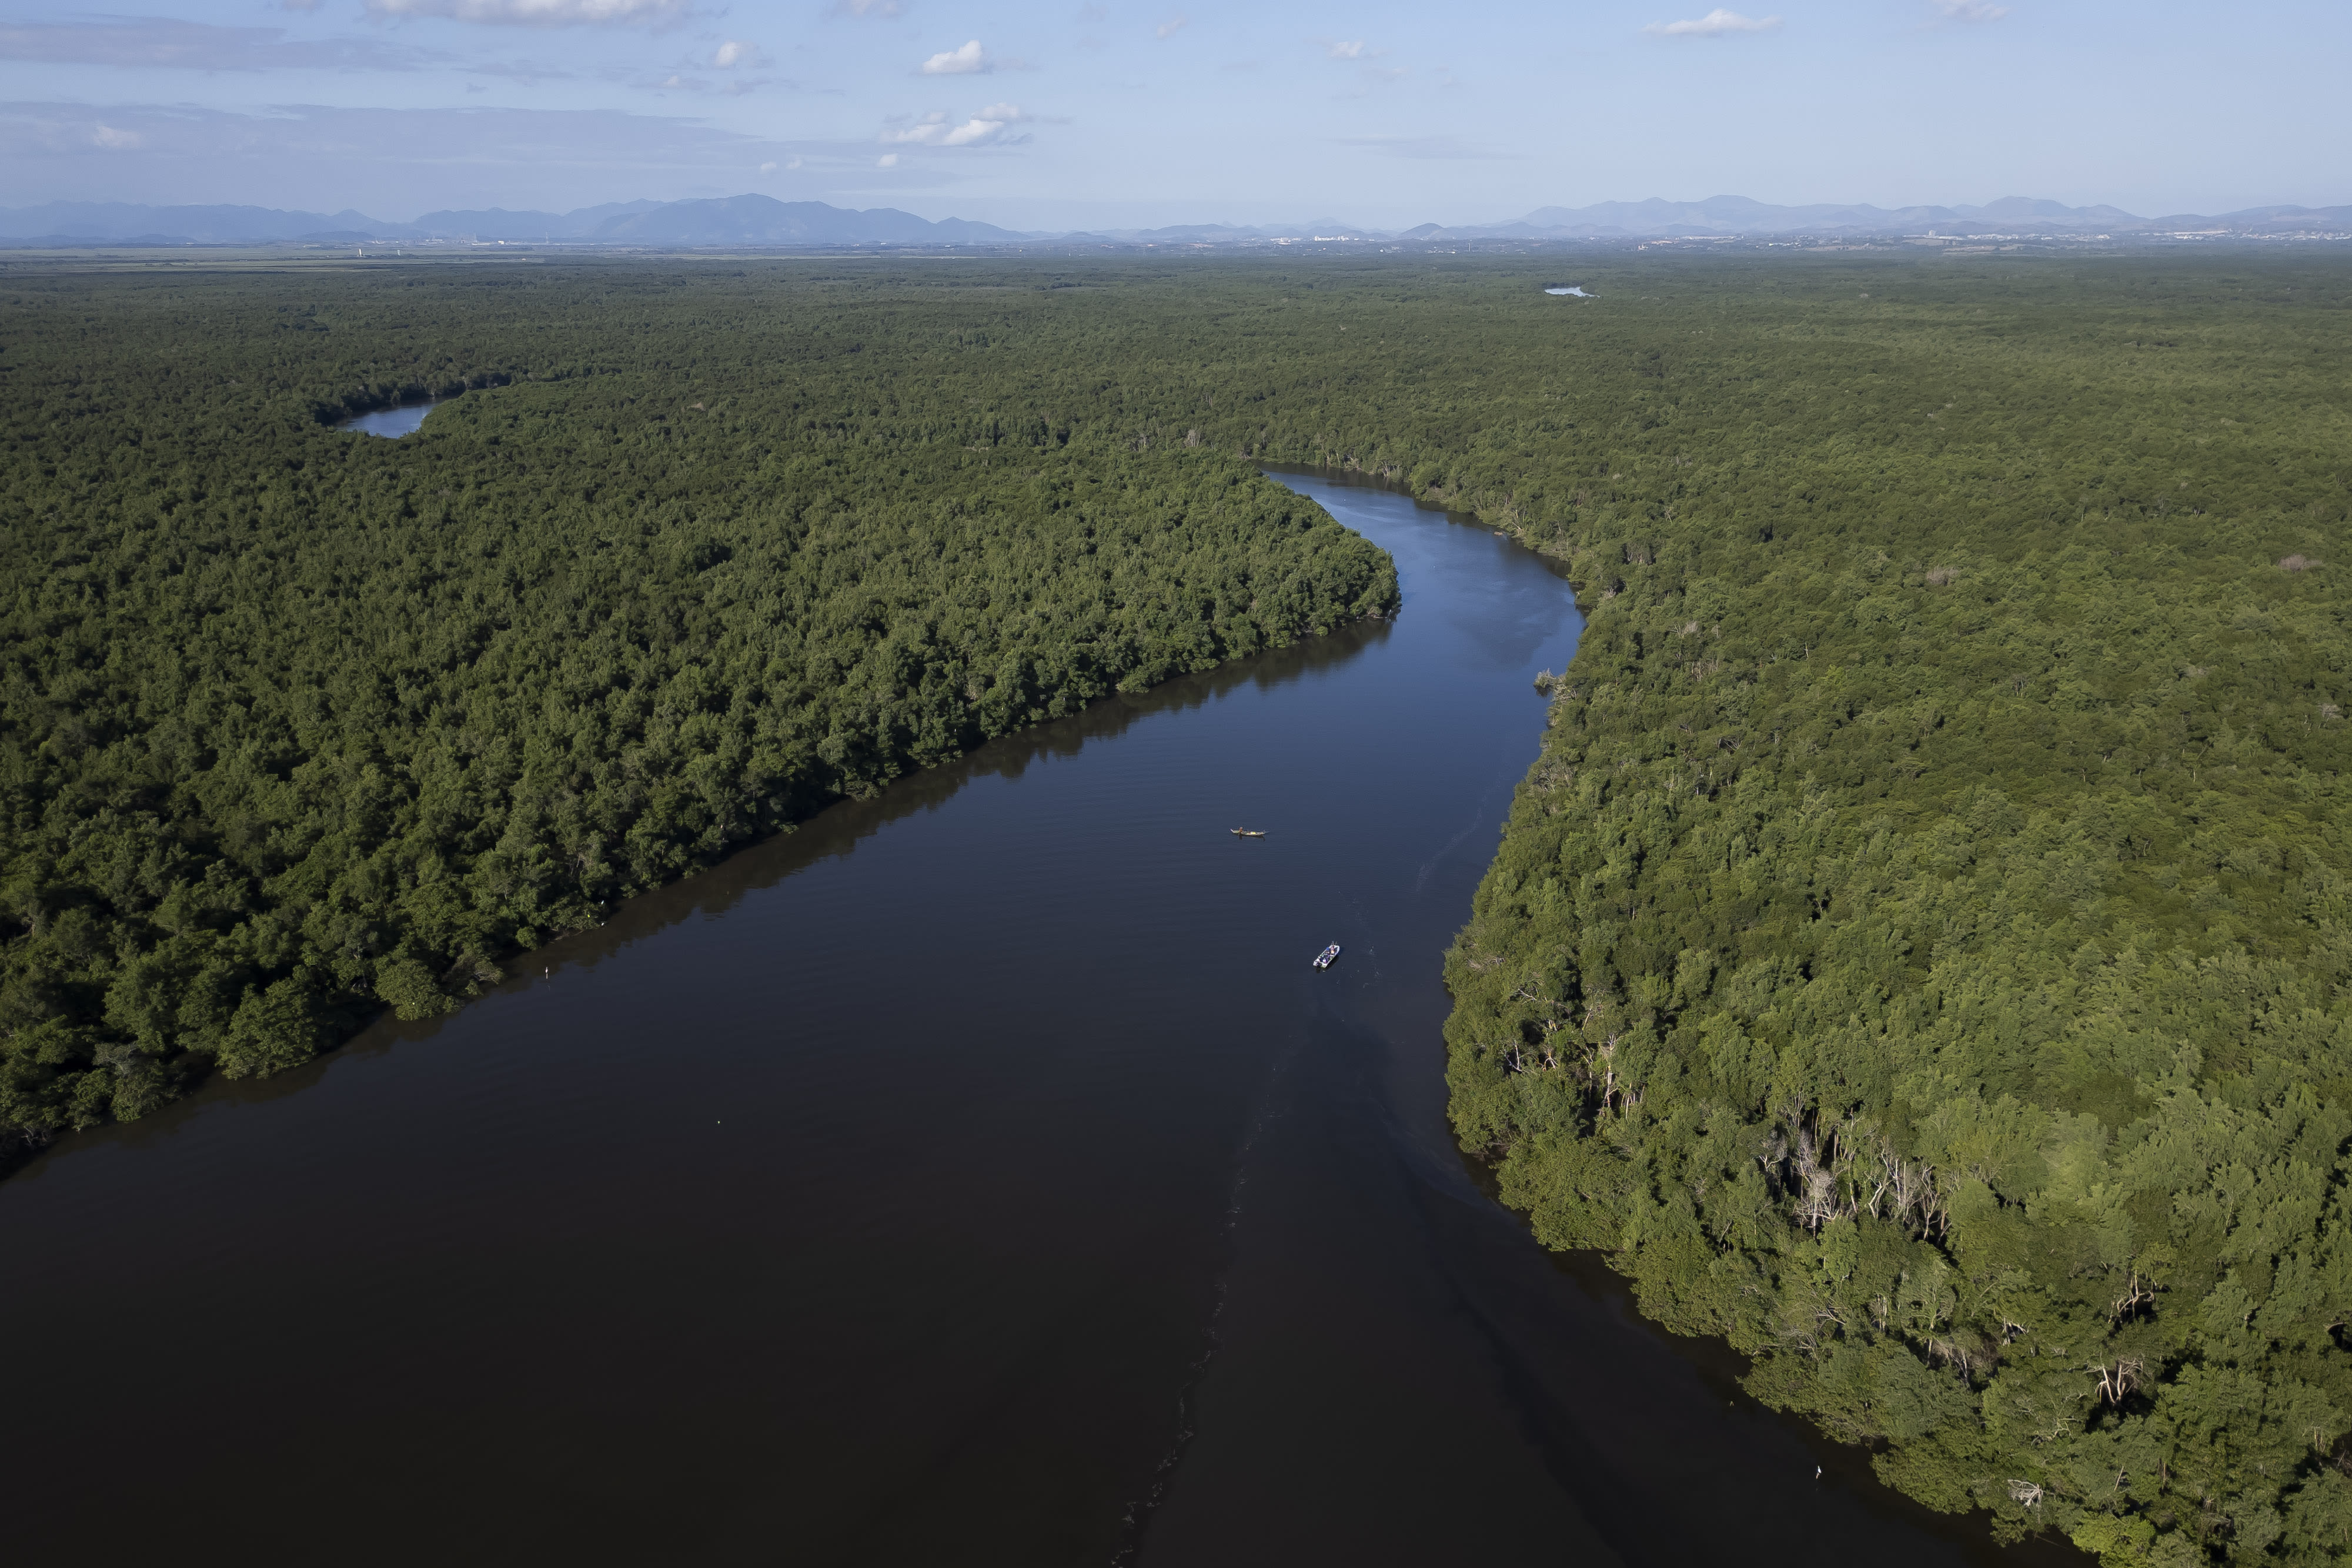 Rio de Janeiro bay reforestation shows mangroves' power to mitigate climate disasters